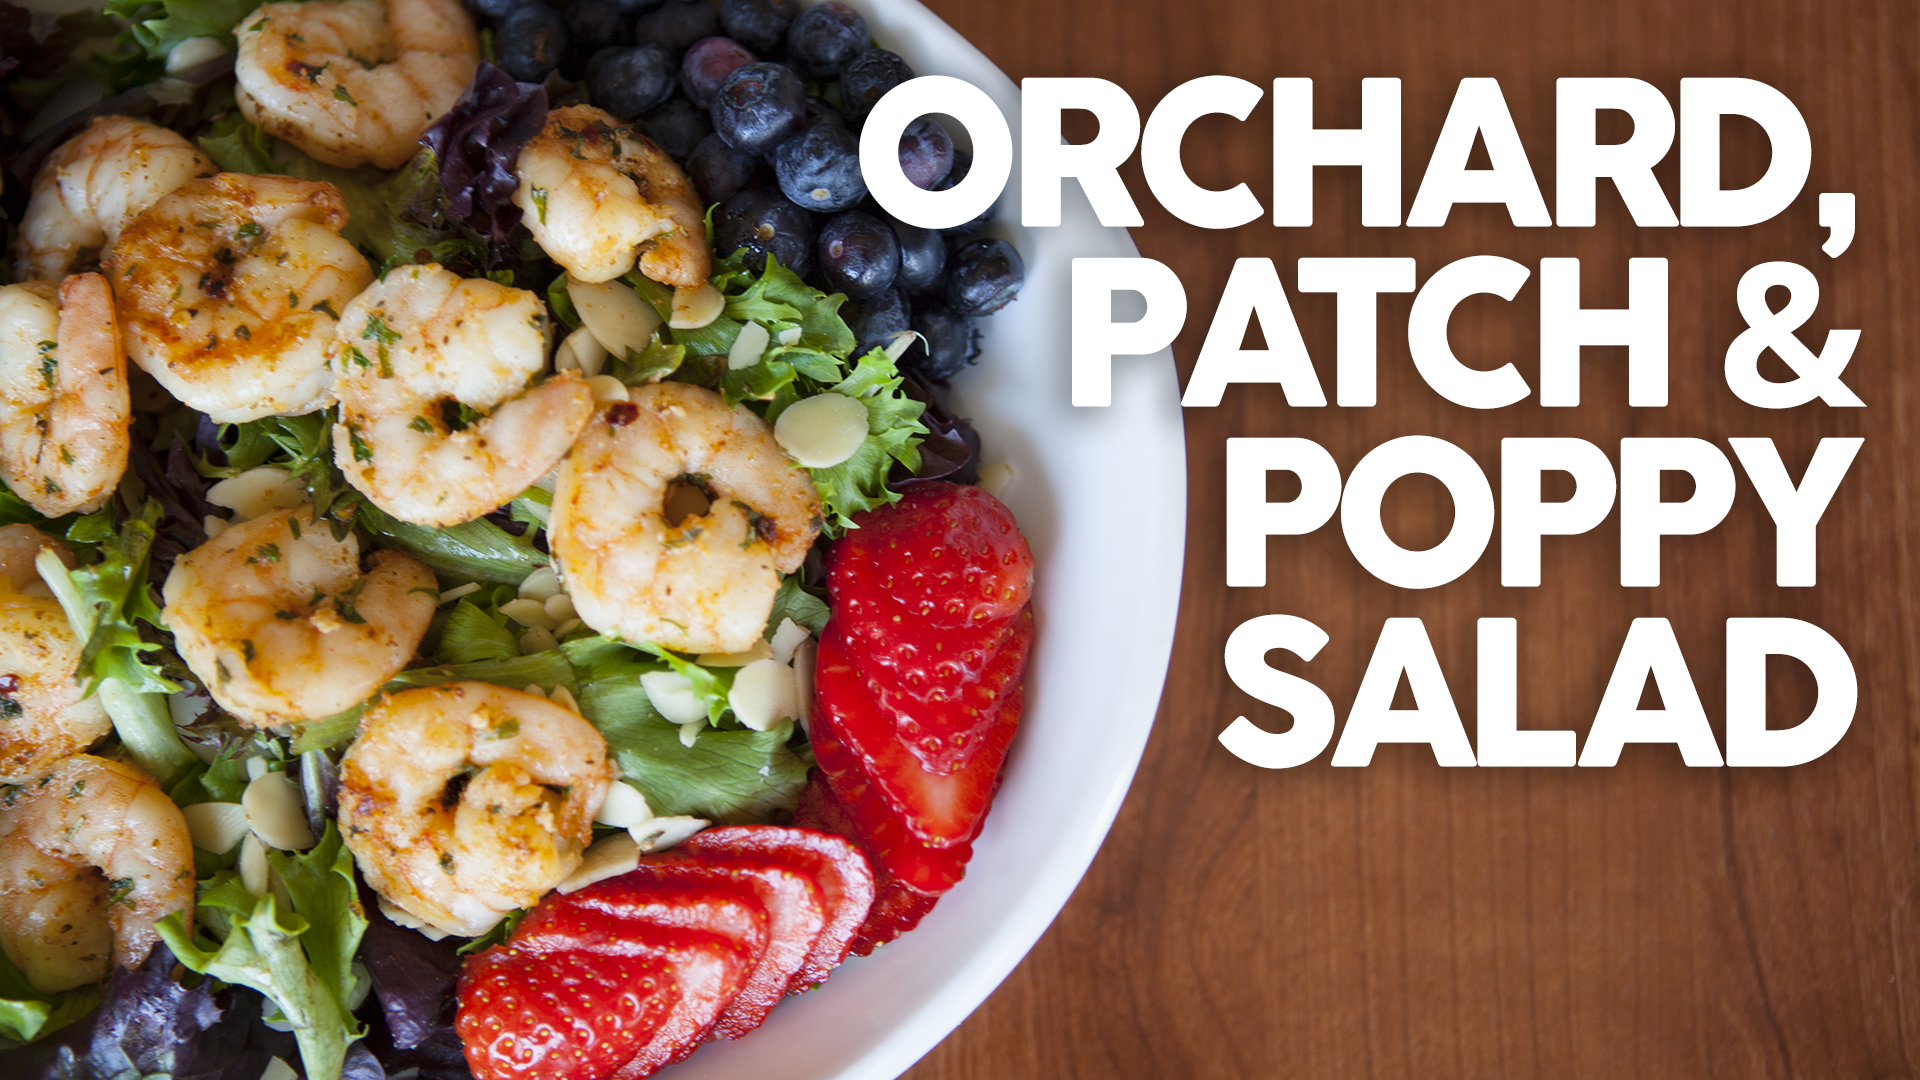 Orchard, Patch & Poppy Salad